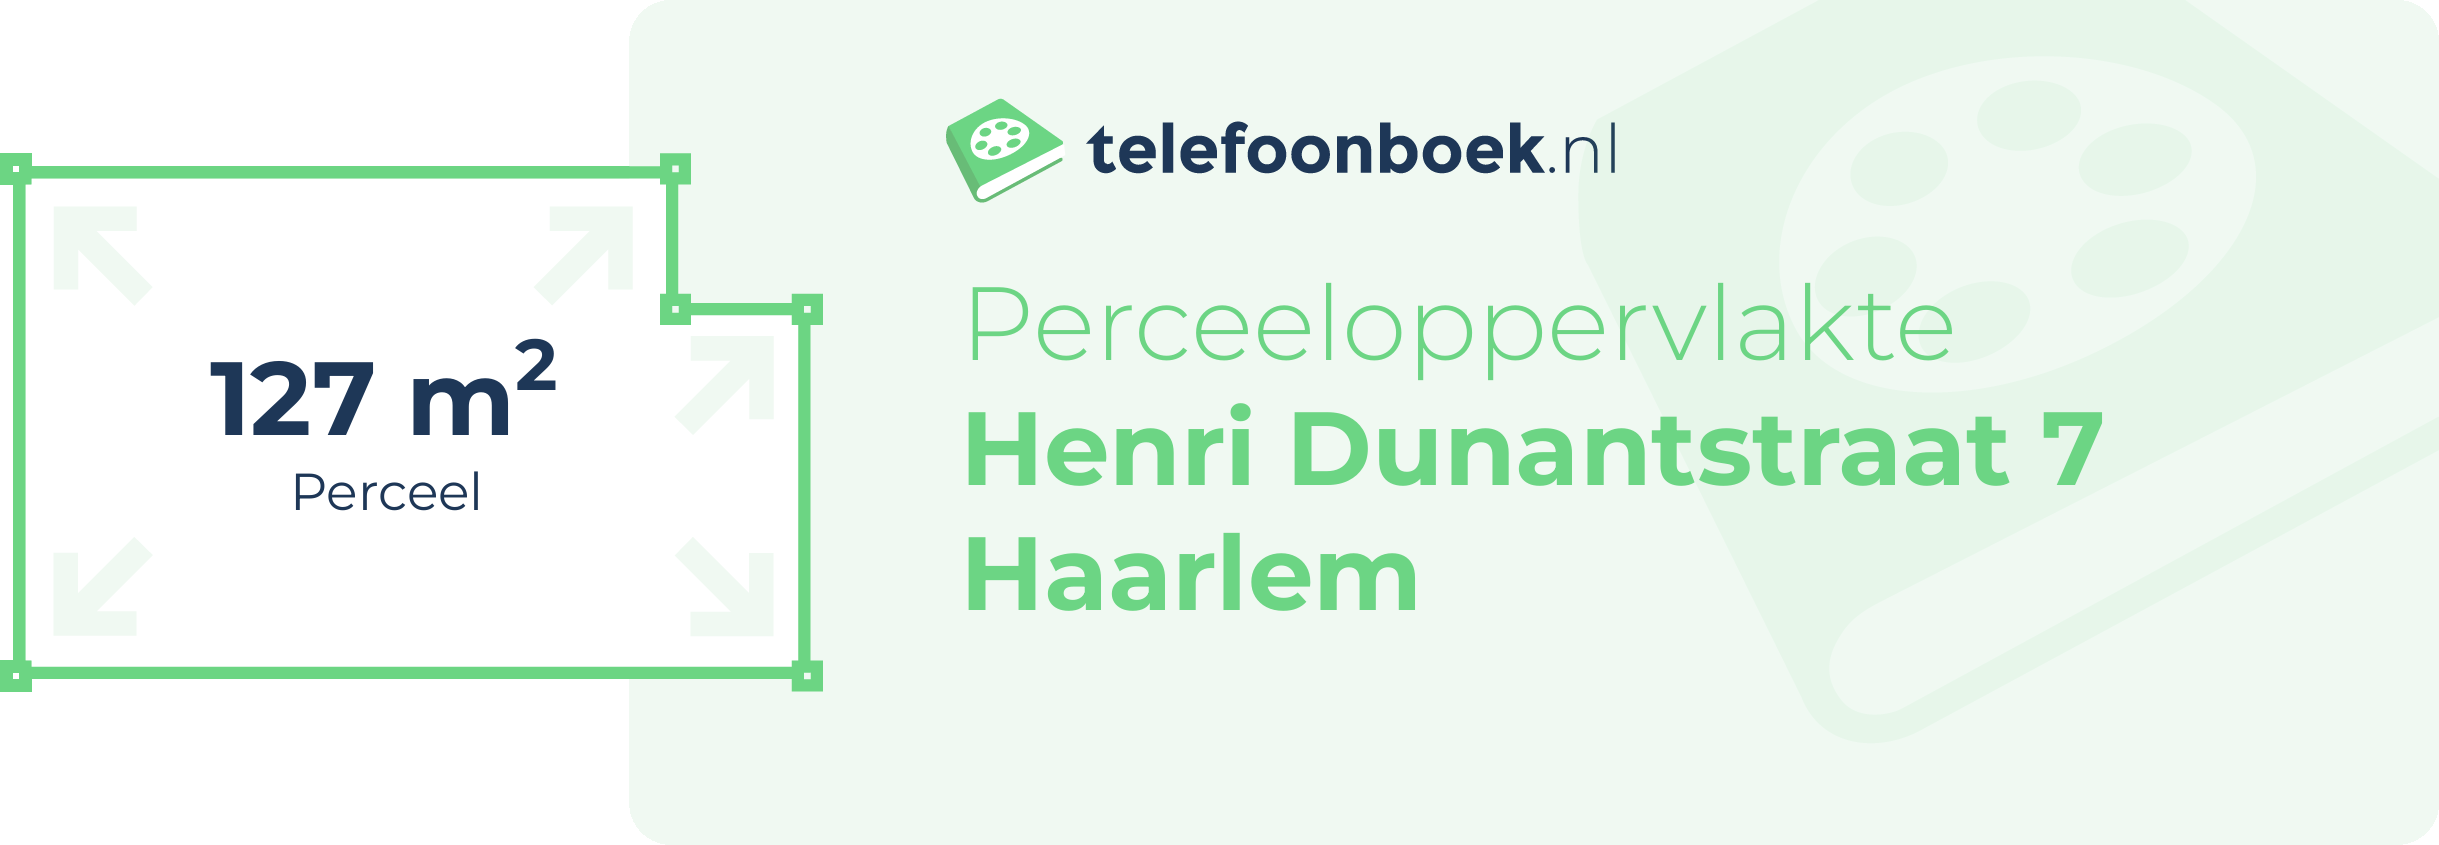 Perceeloppervlakte Henri Dunantstraat 7 Haarlem